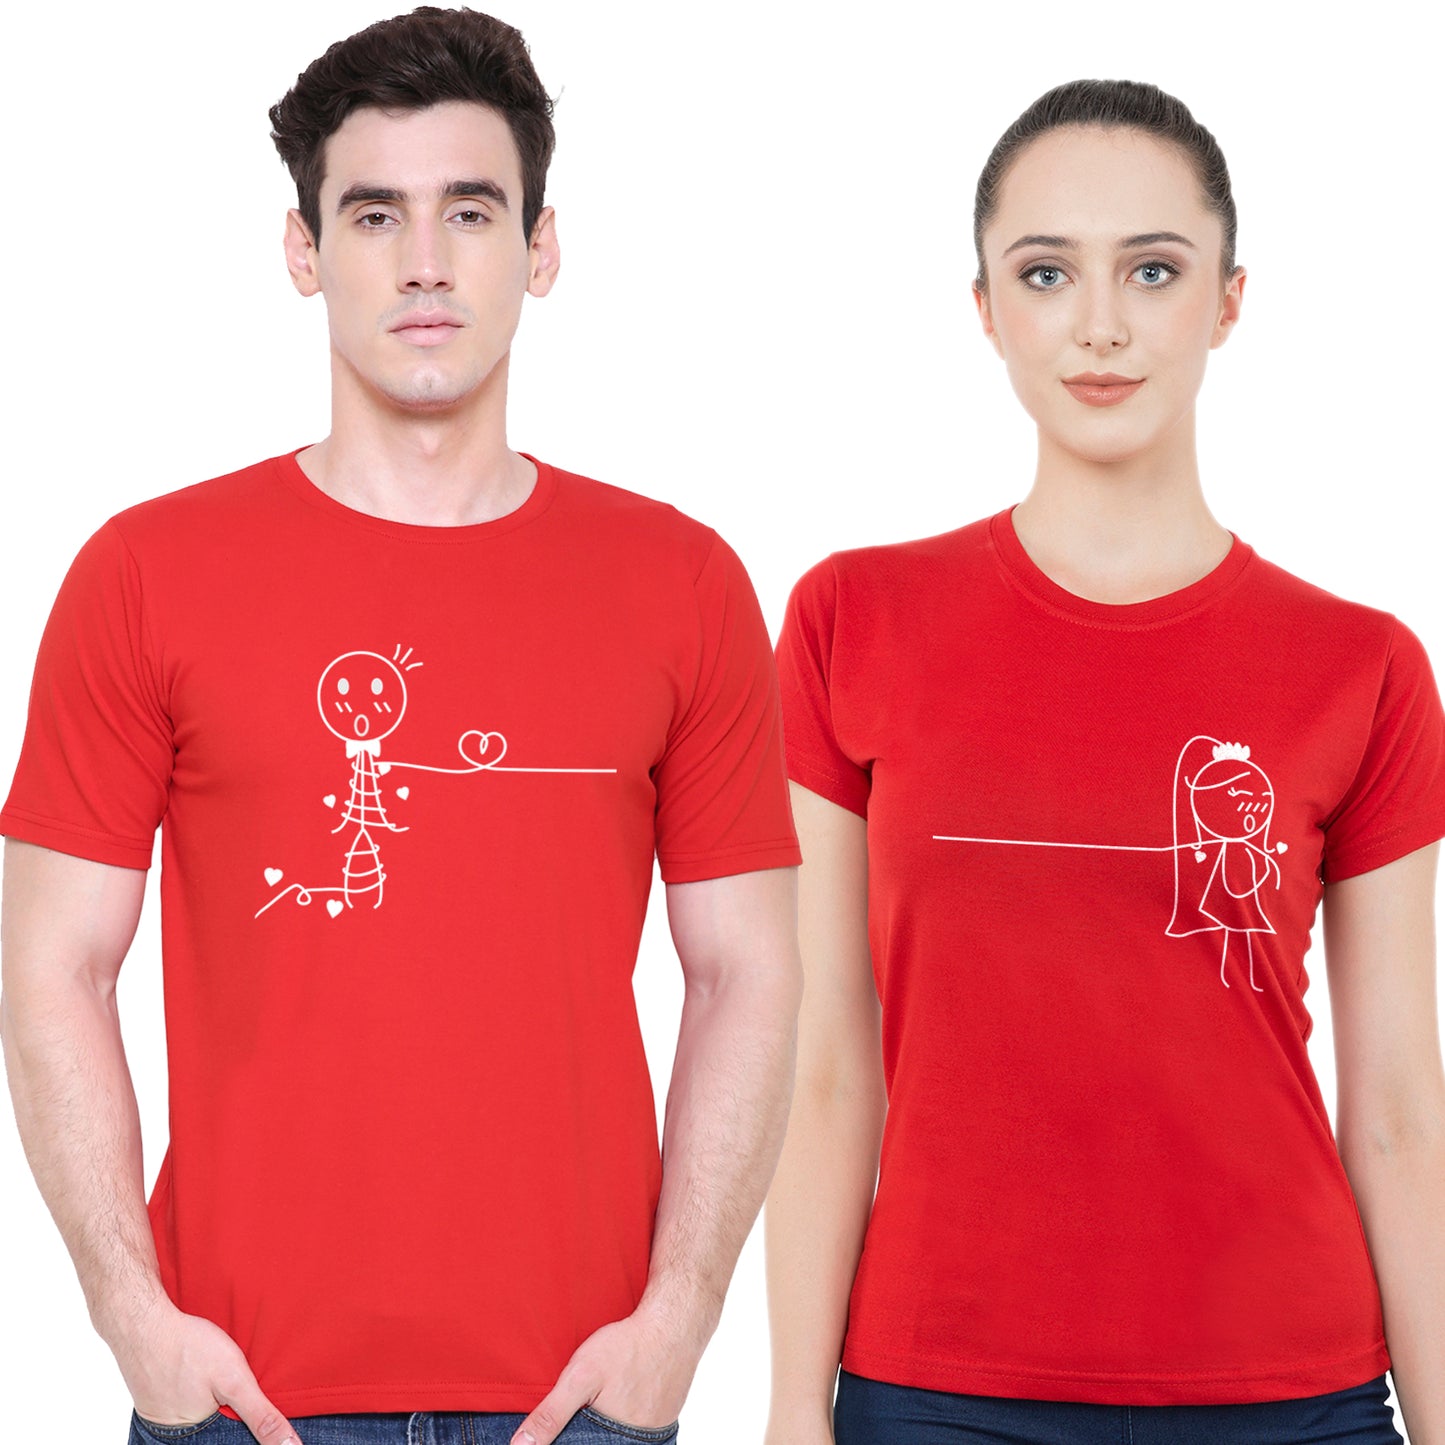 Love Bondmatching Couple T shirts- Red